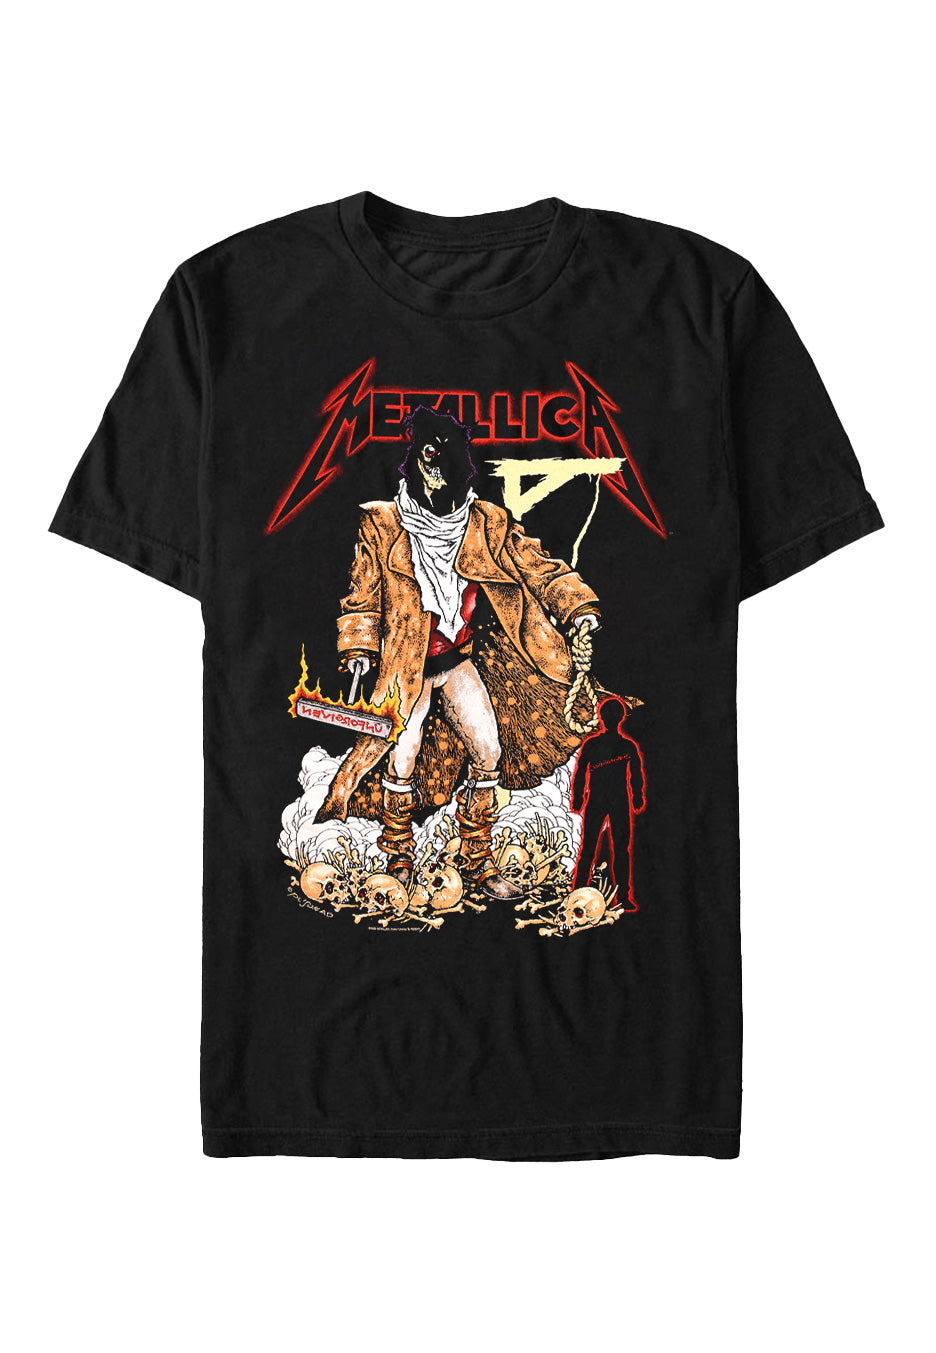 Metallica - The Unforgiven Executioner - T-Shirt